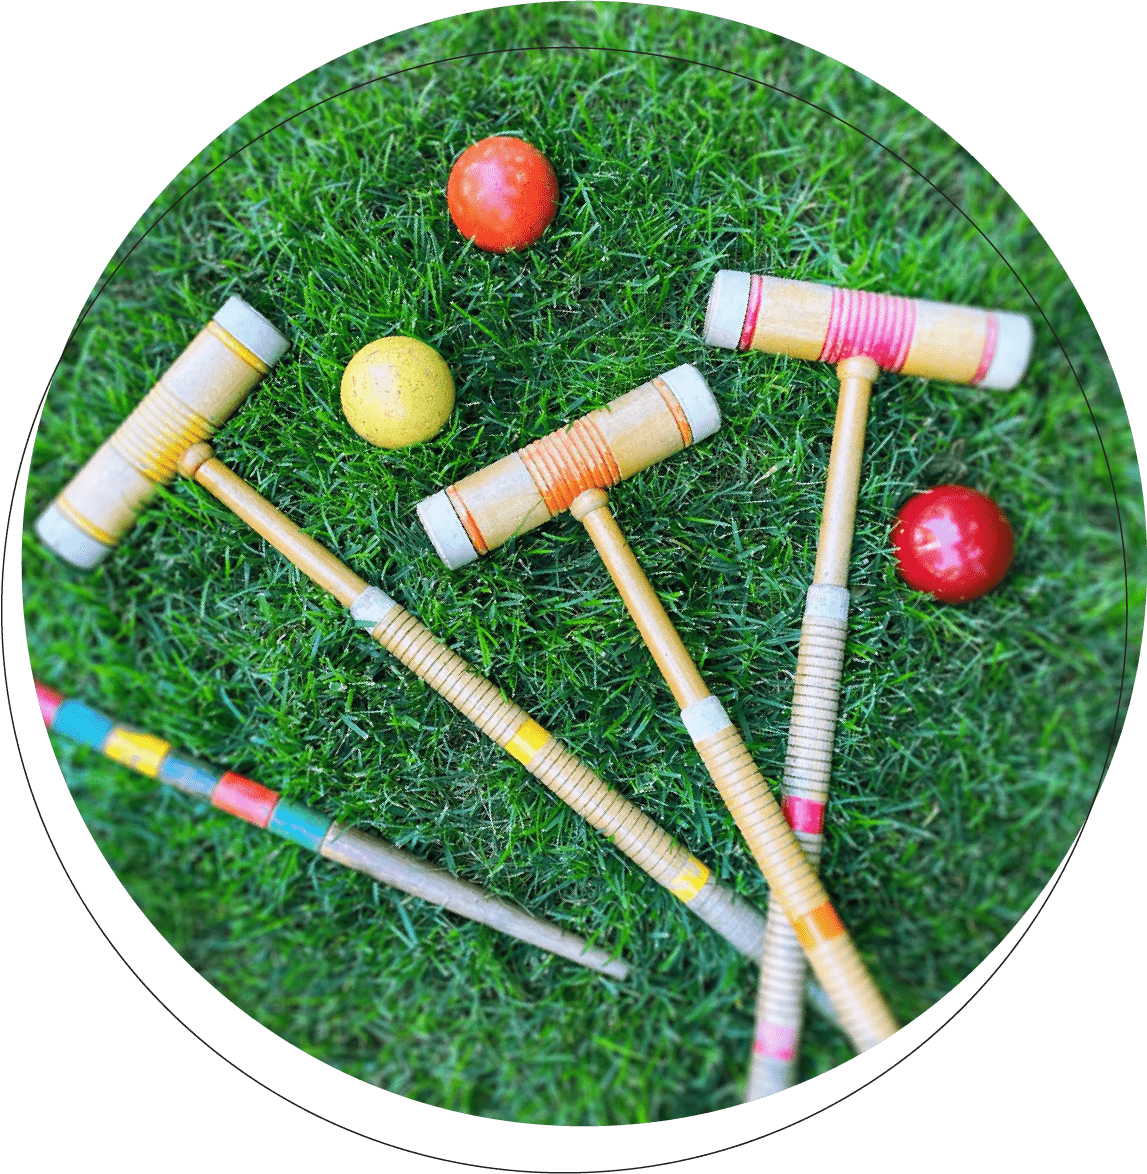 Cricket, Badminton, Table Tennis, Frisbee